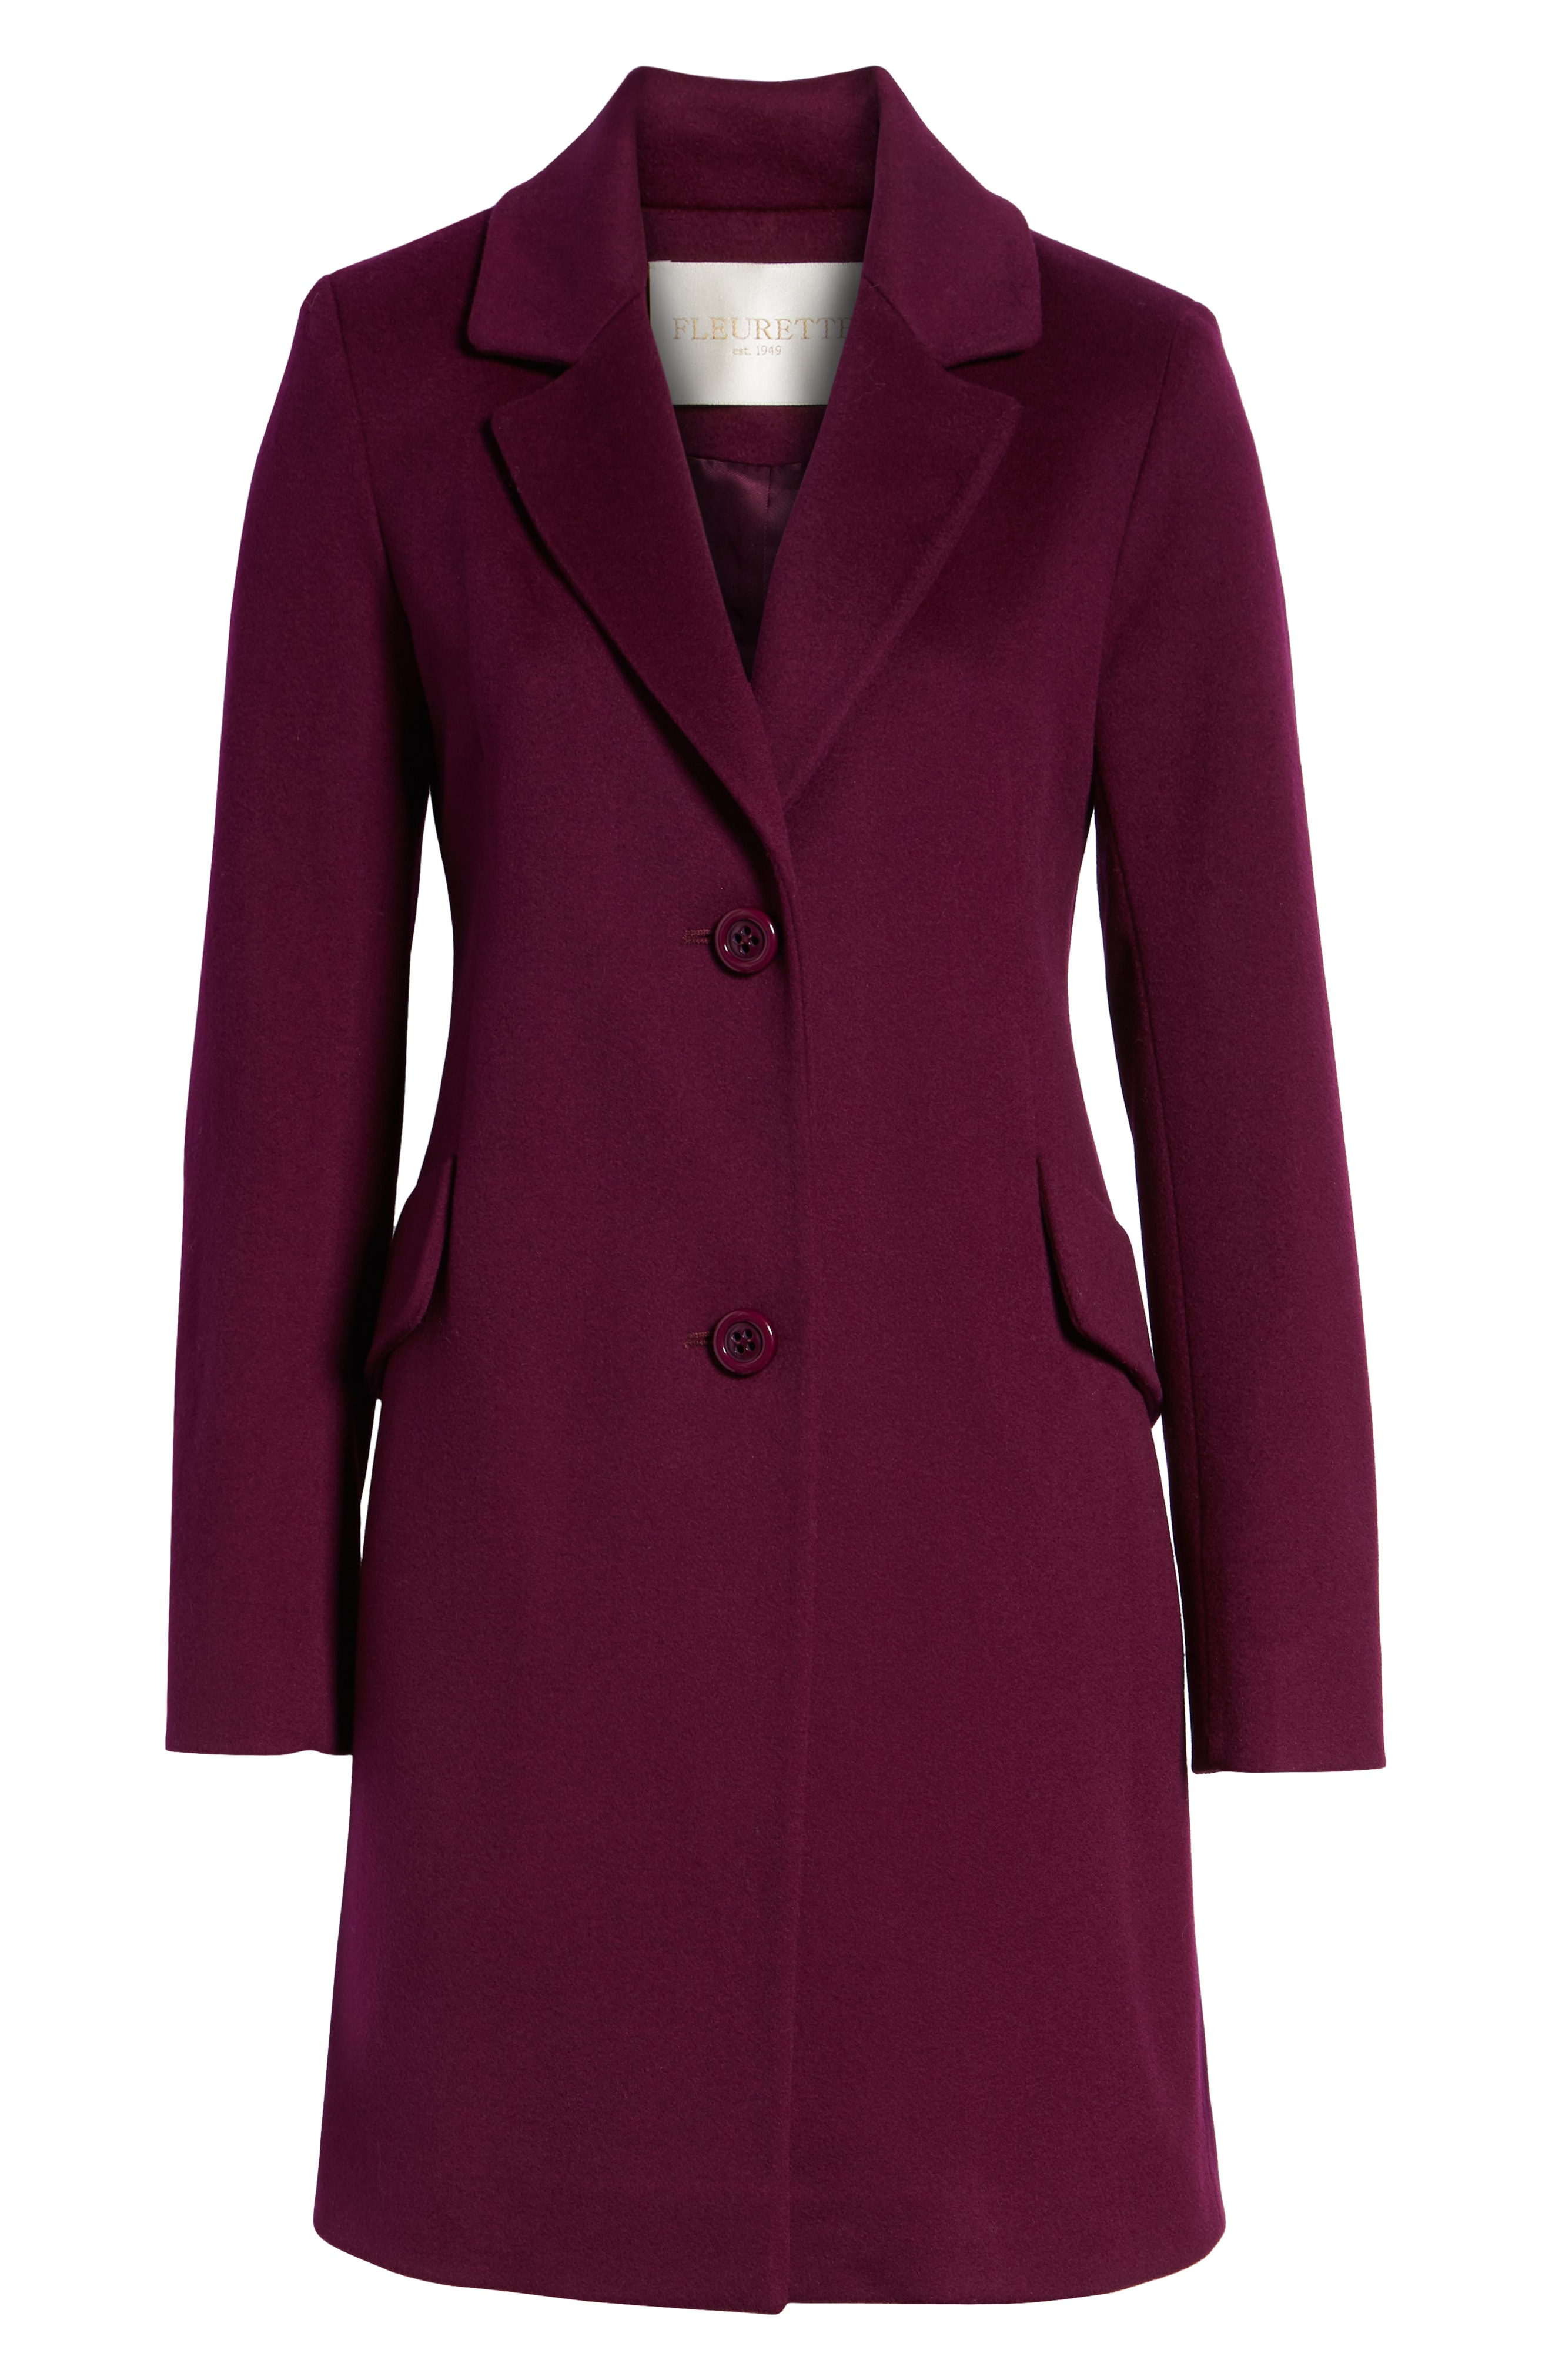 Women's Purple Coats & Jackets | Nordstrom